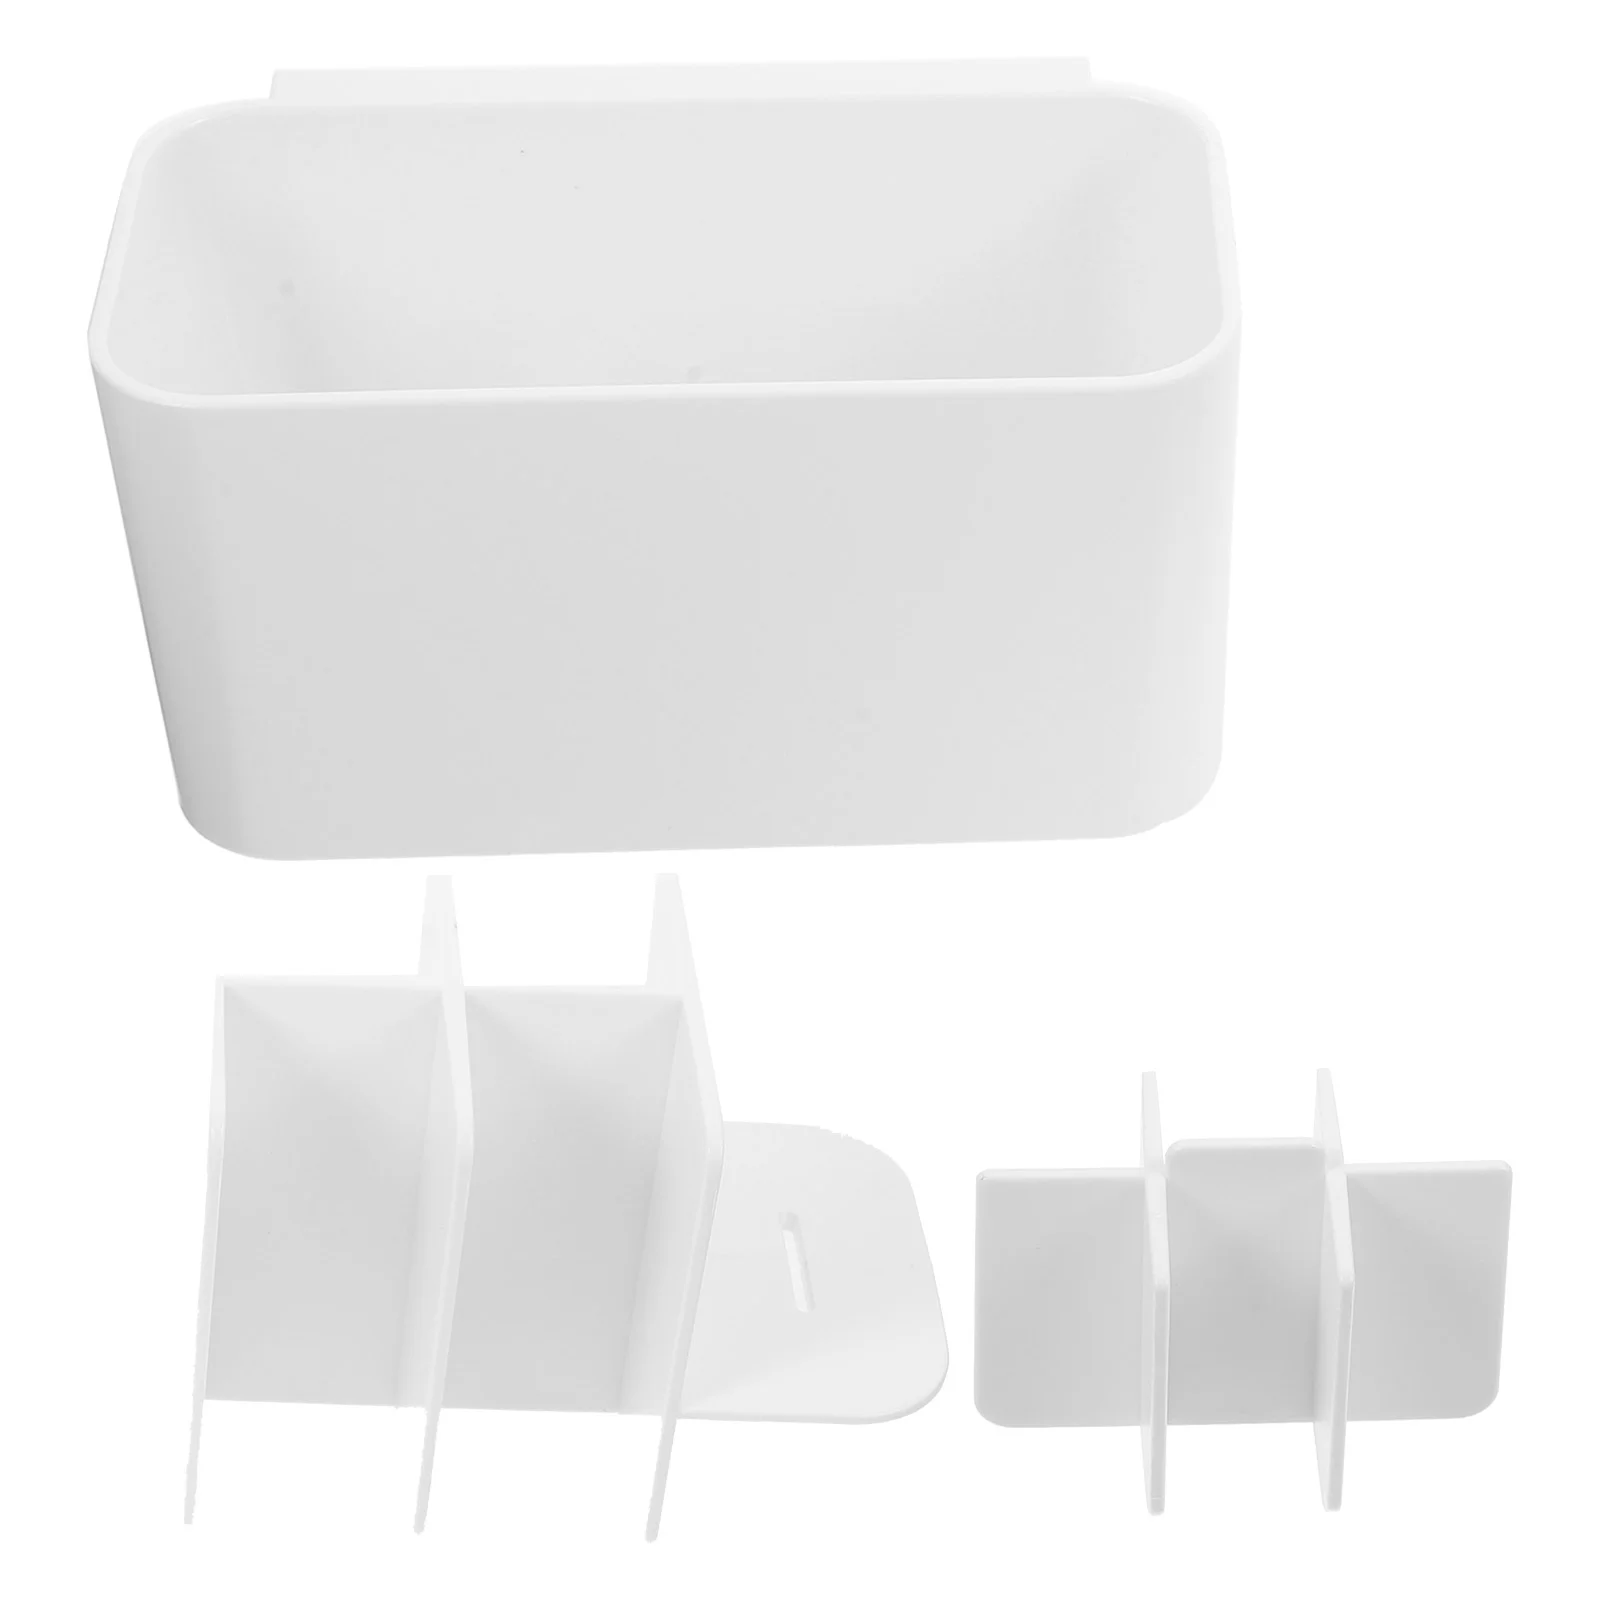 

Bathroom Nail-free Box Storage Box Toothbrush Holder Basin Storage Holder for Home